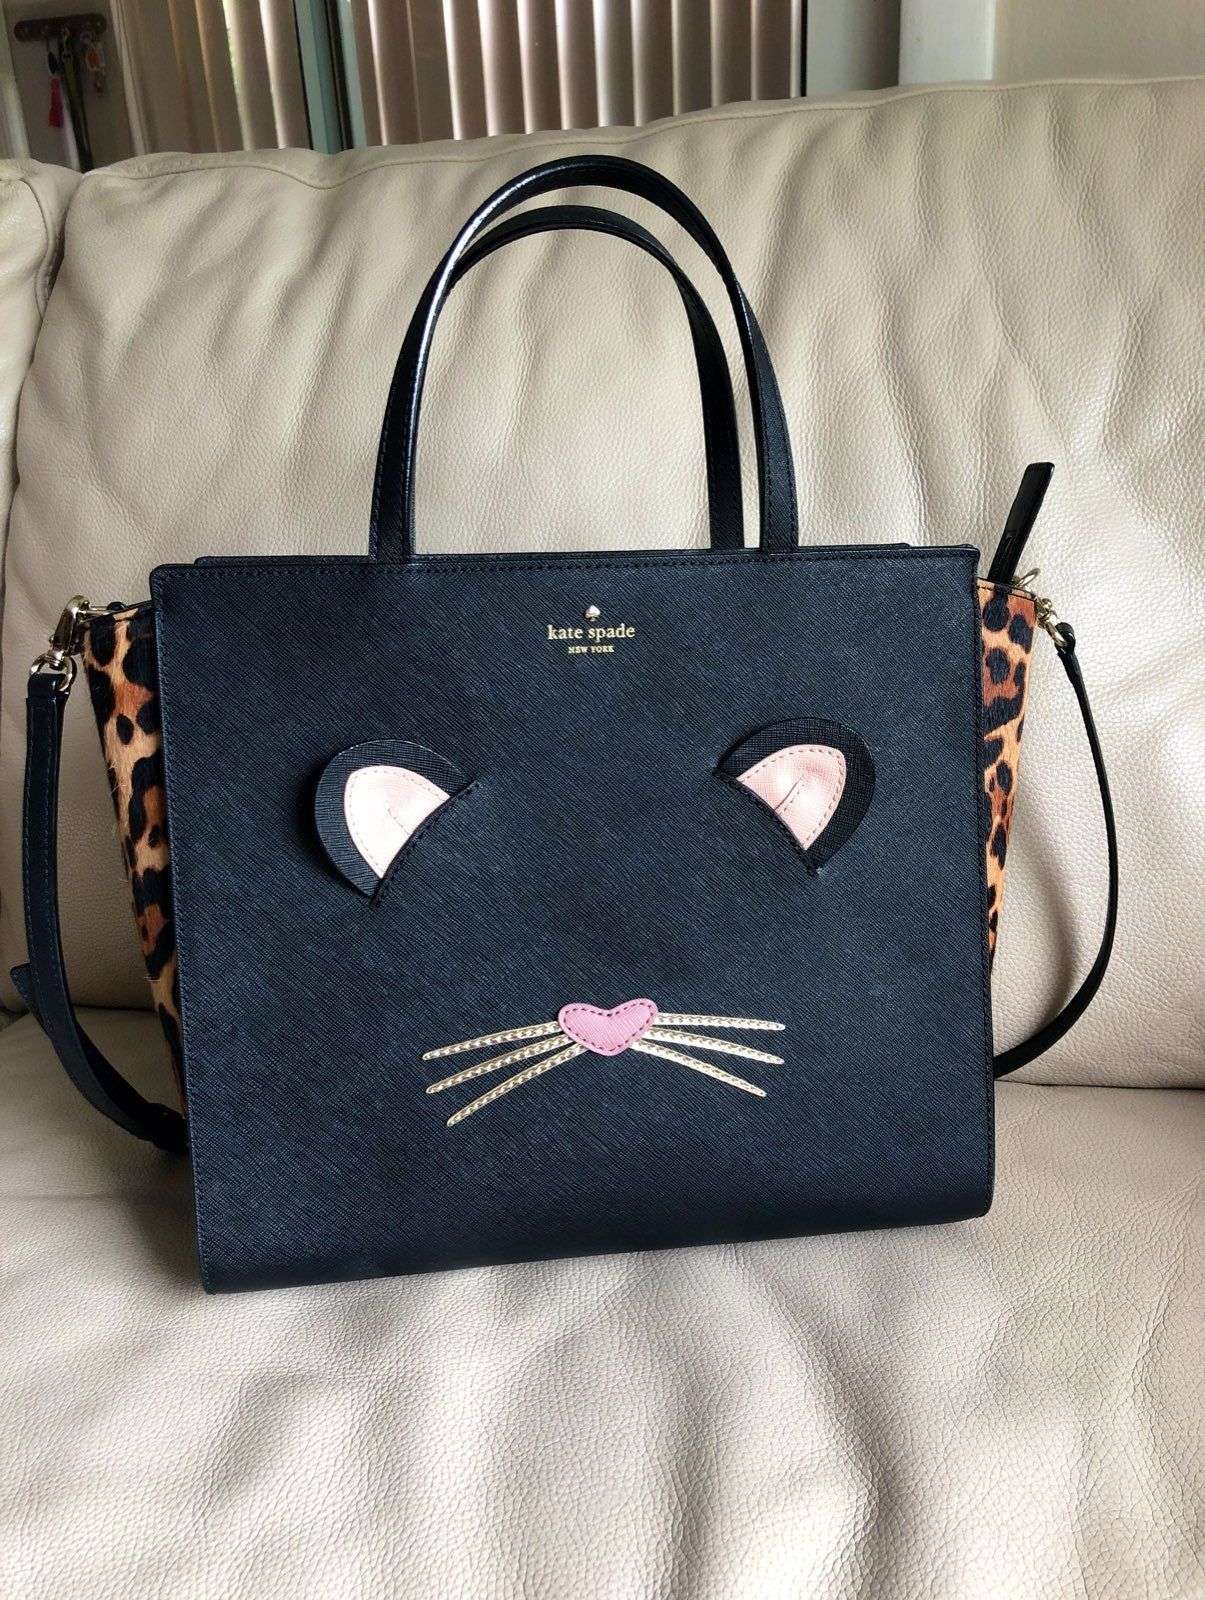 Kate Spade cat face Handbag perfect condition